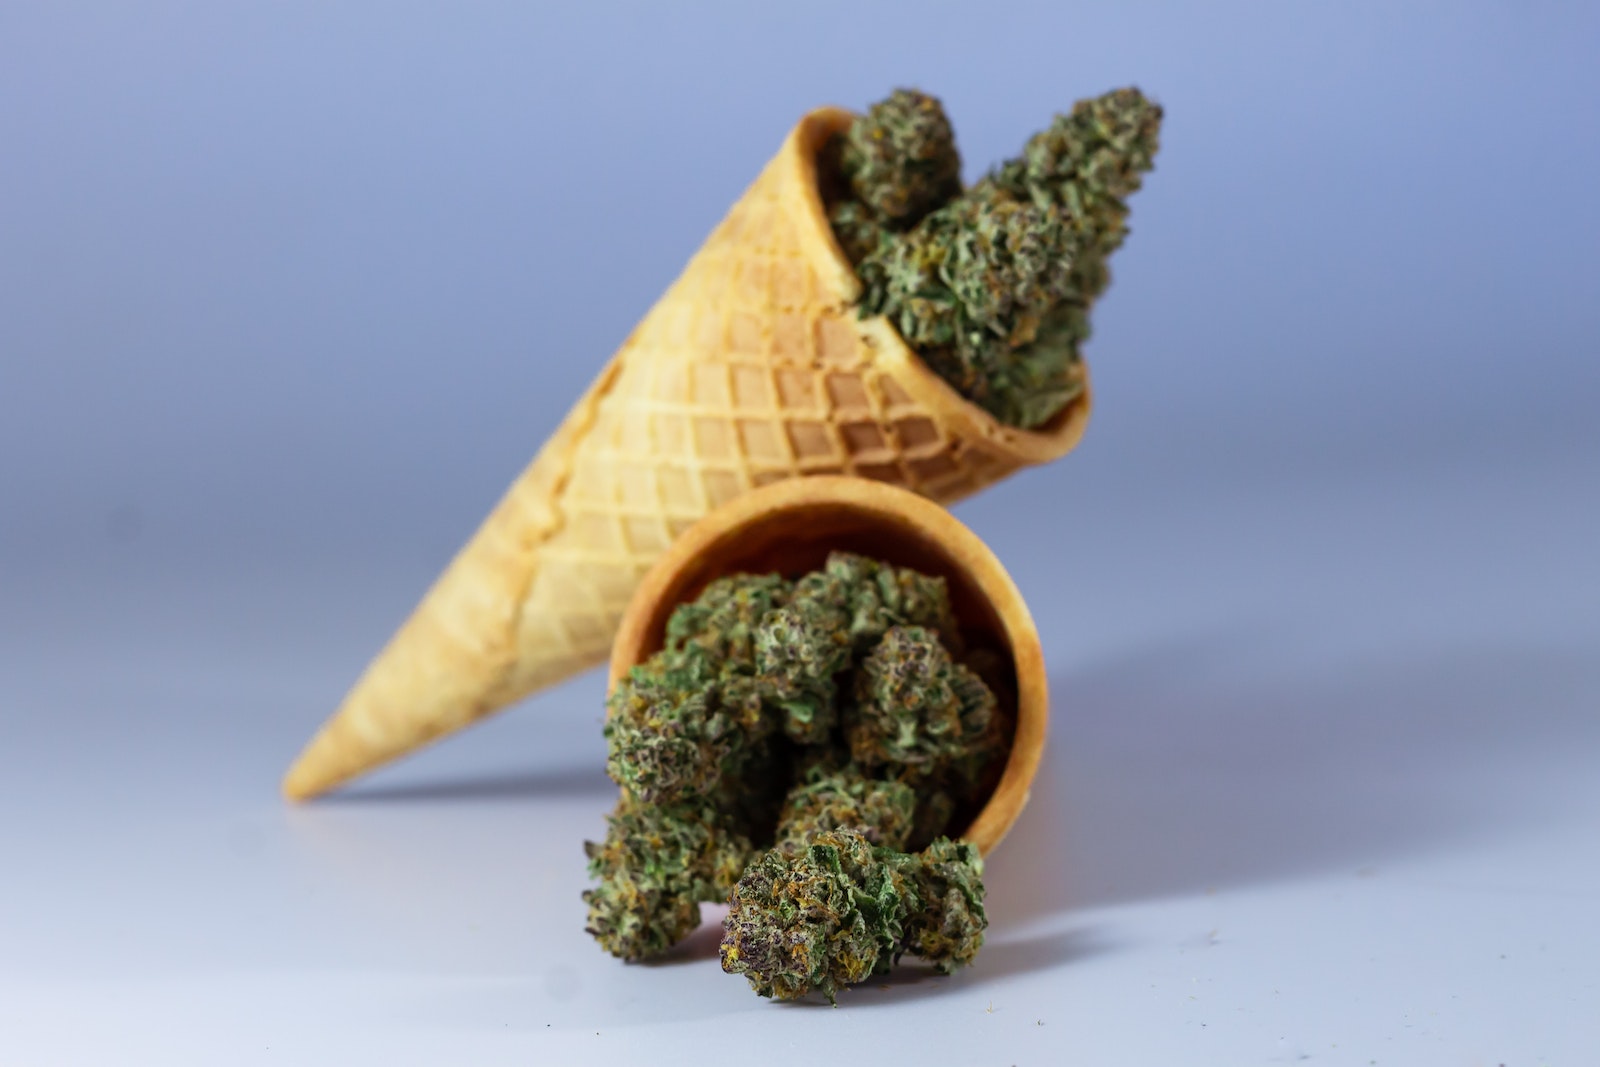 Cannabis Inside the Ice Cream Cones